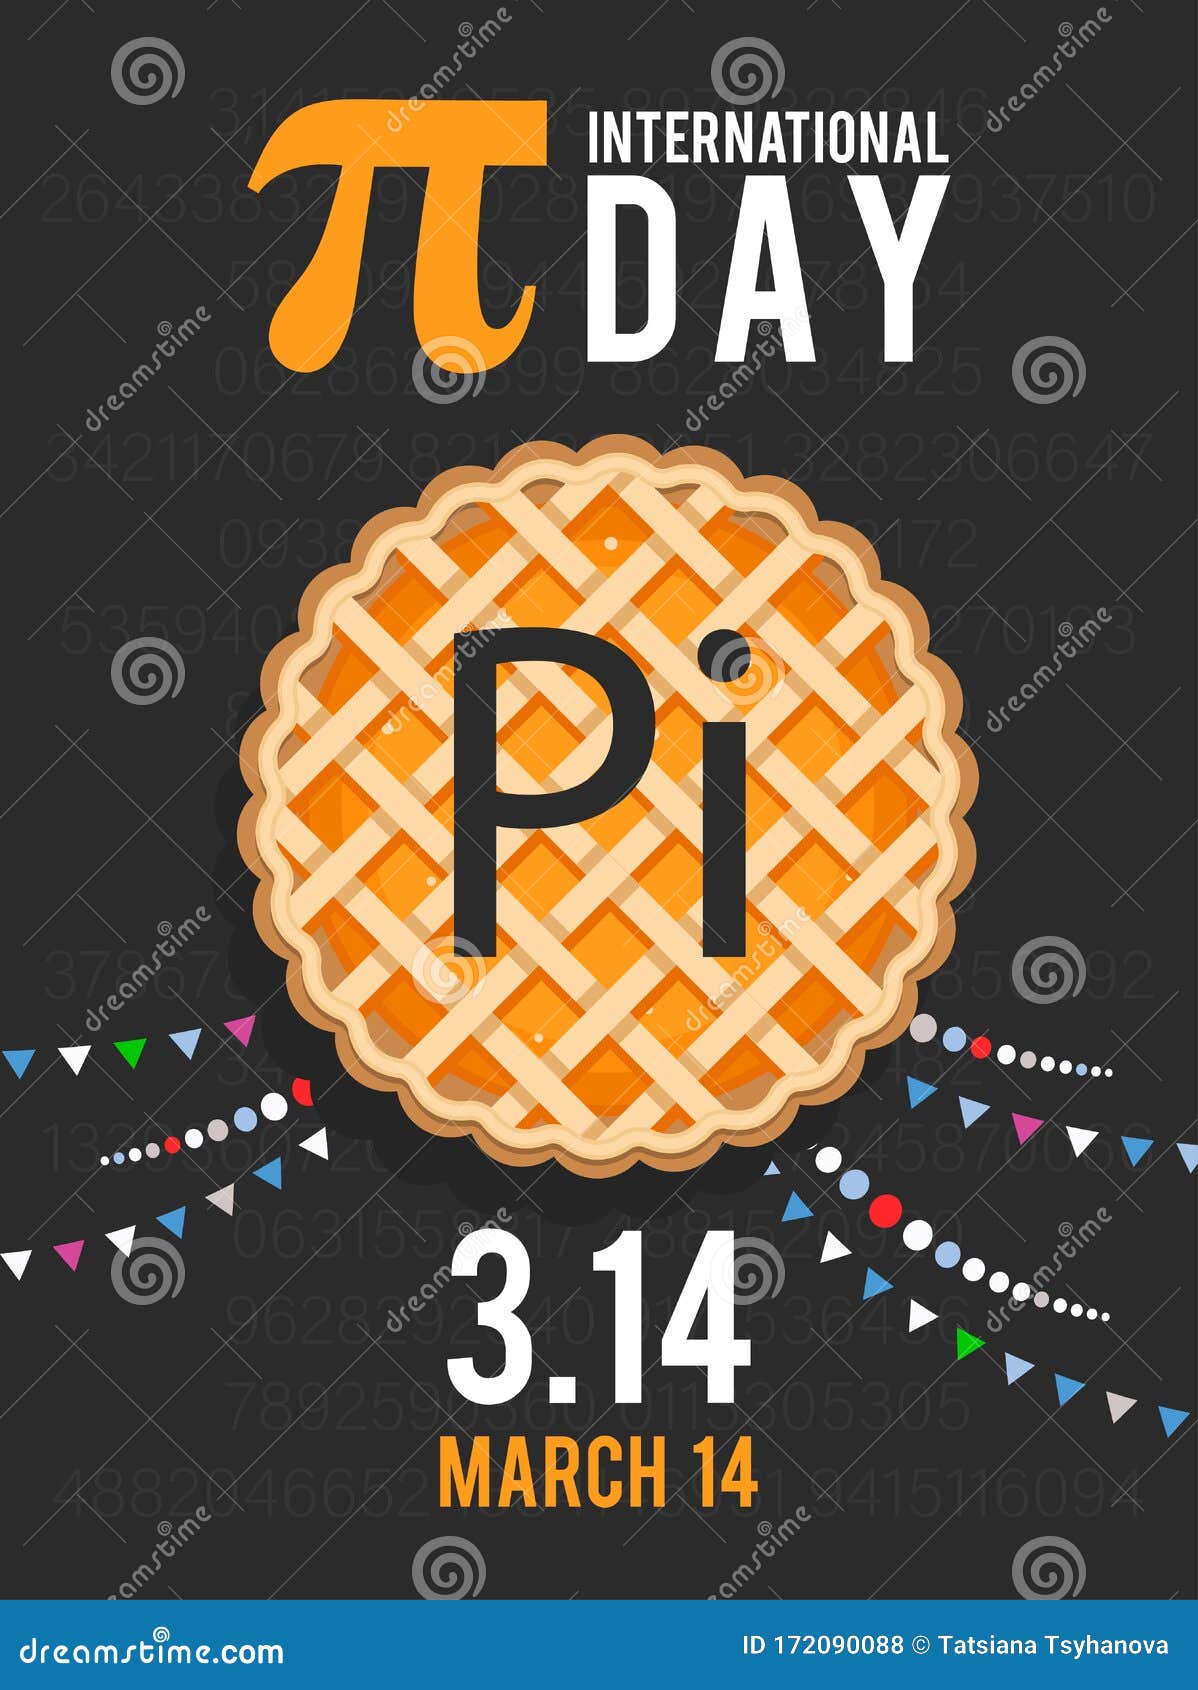 happy world pi day! the ratio of a circleÃ¢â¬â¢s circumference to its diameter